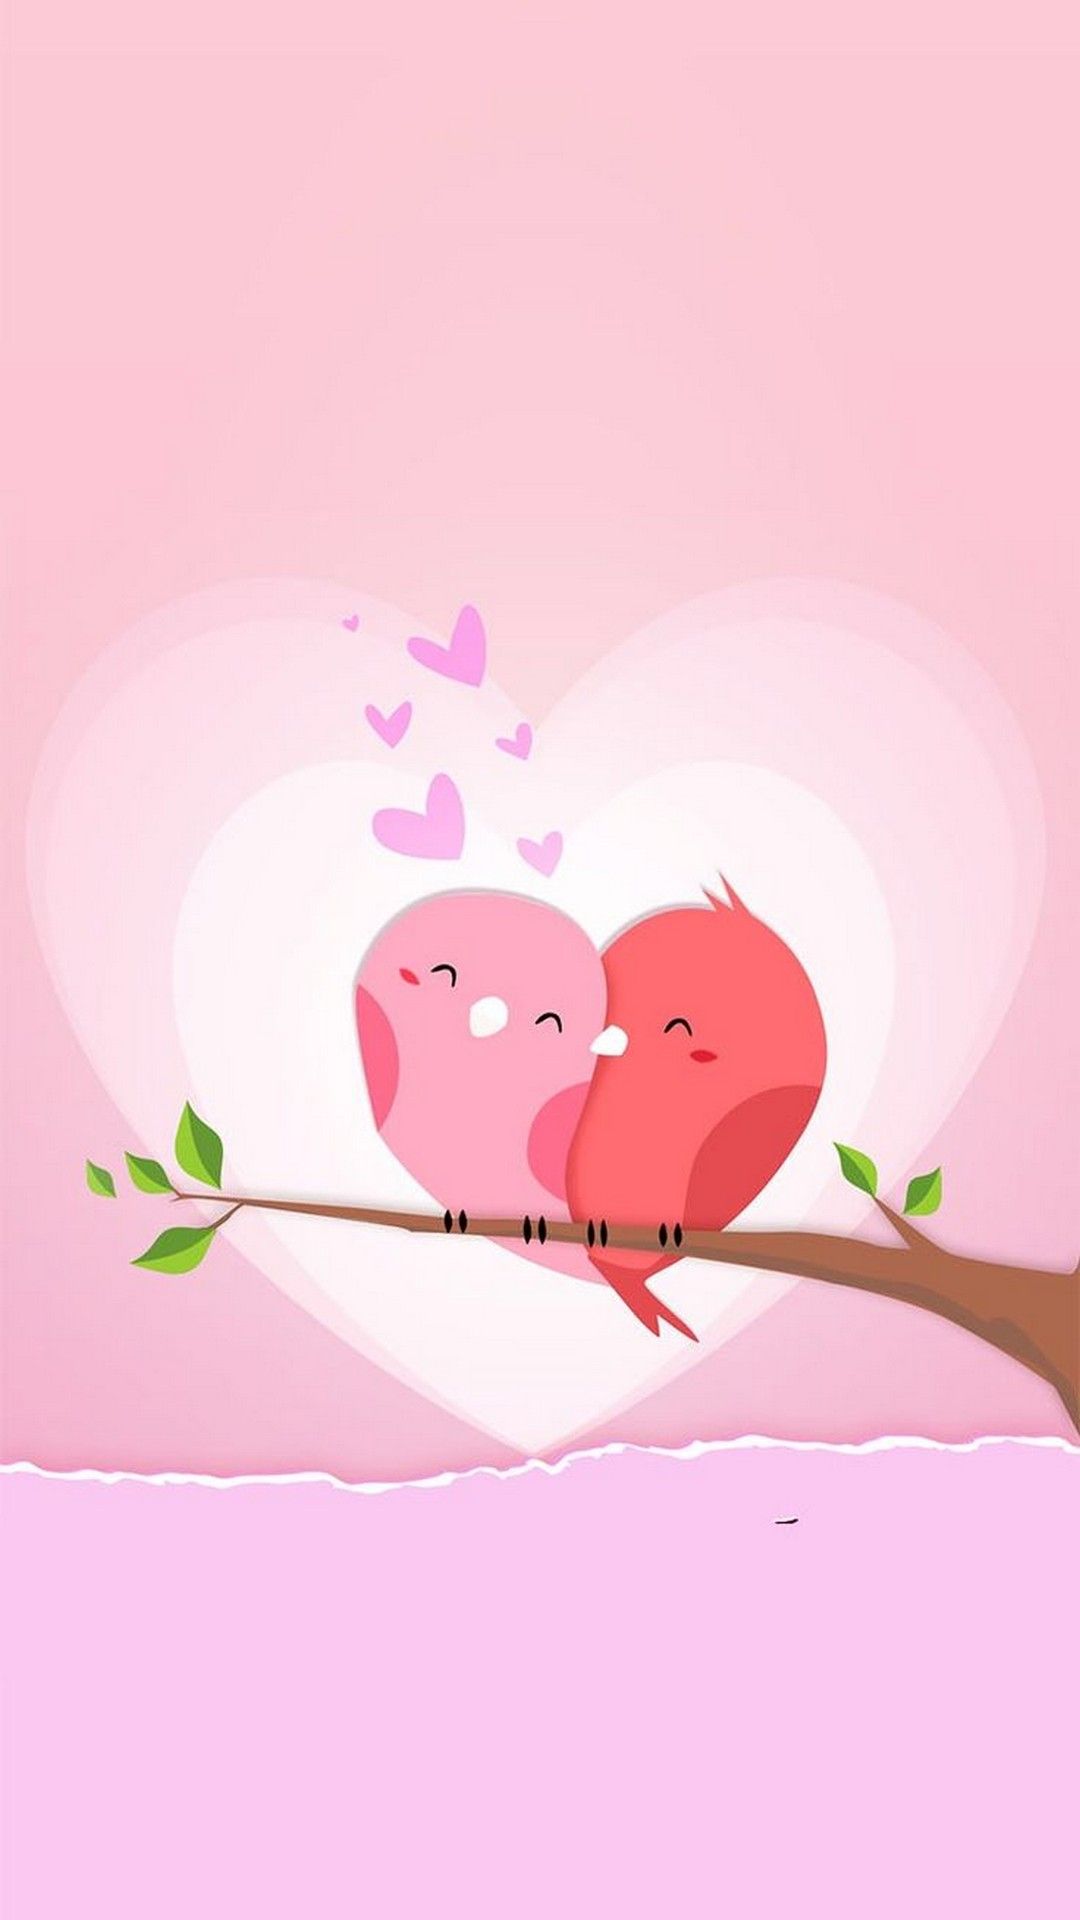 Romantic Image Of Valentines Day iPhone Wallpaper. Valentines